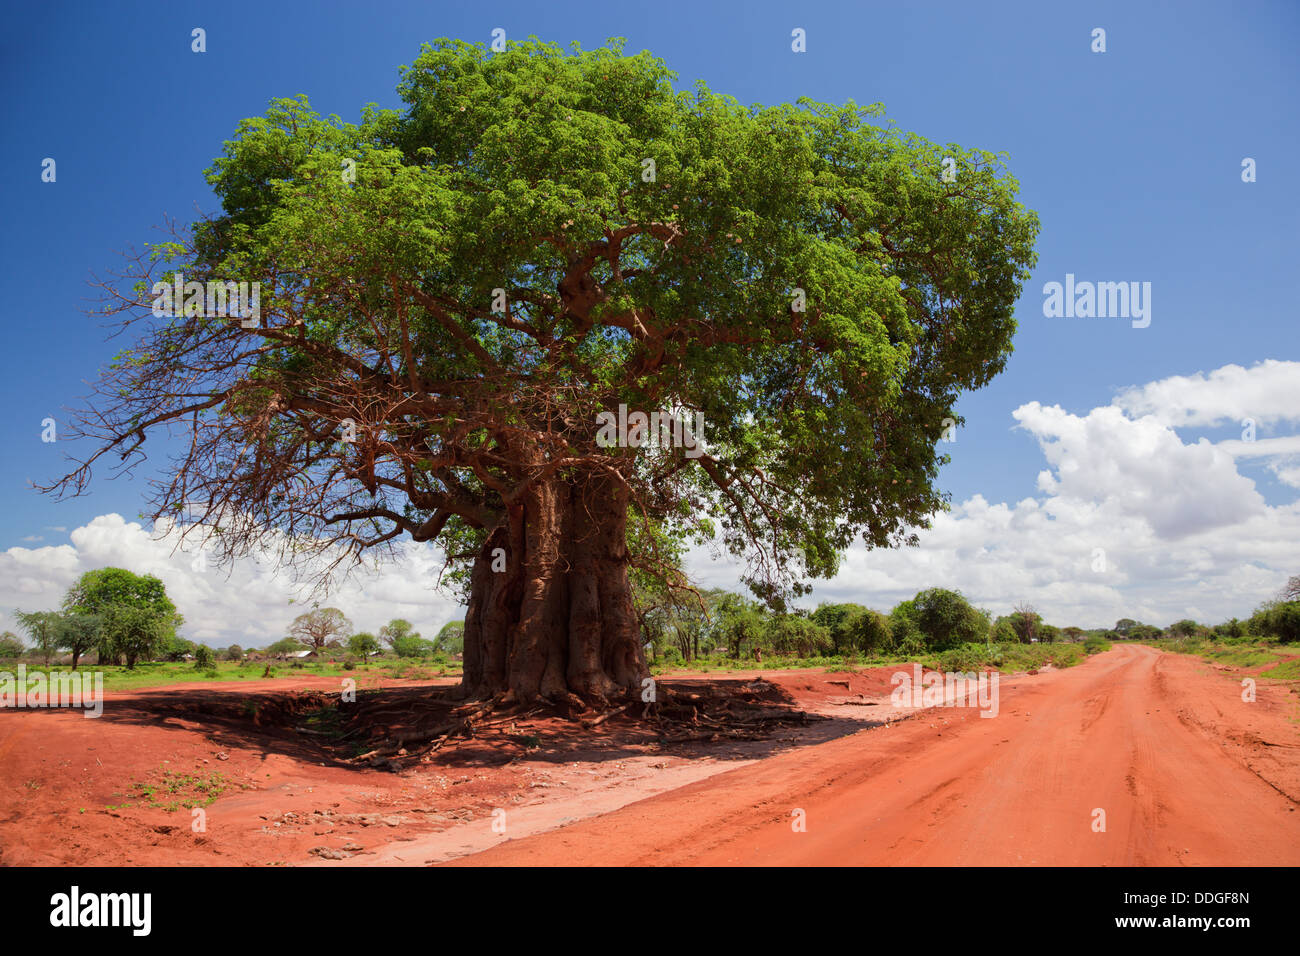 Baobab tree (Adansonia) on red dirt road, Kenya, Africa Stock Photo